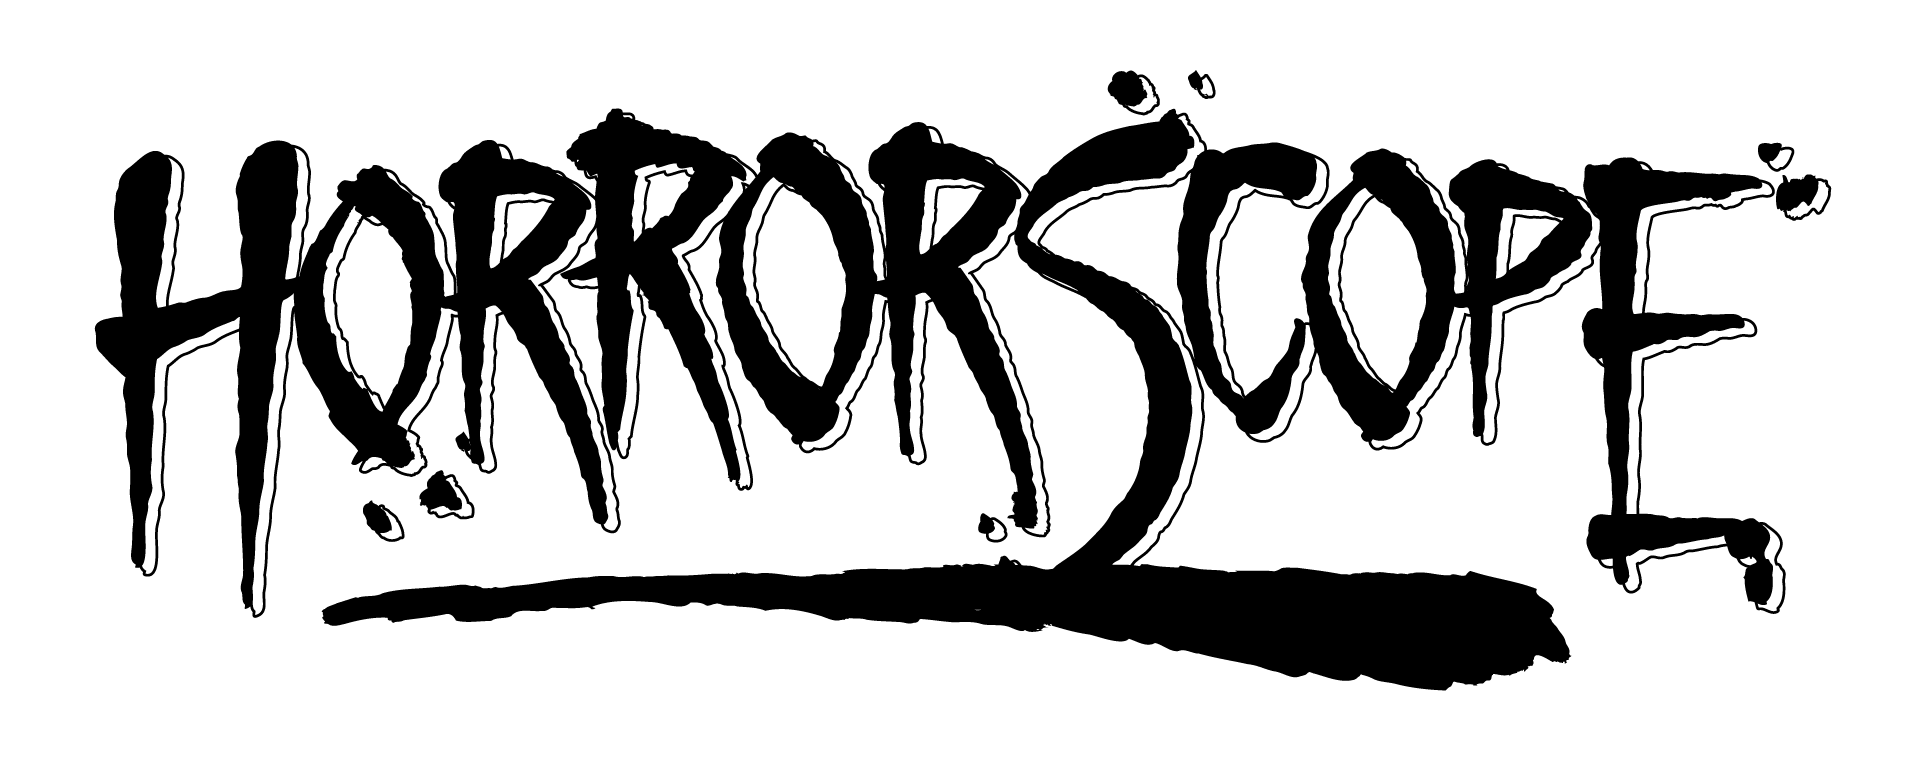 Horror Movie Fonts - HorrorScope Font Download by Wingsart Studio